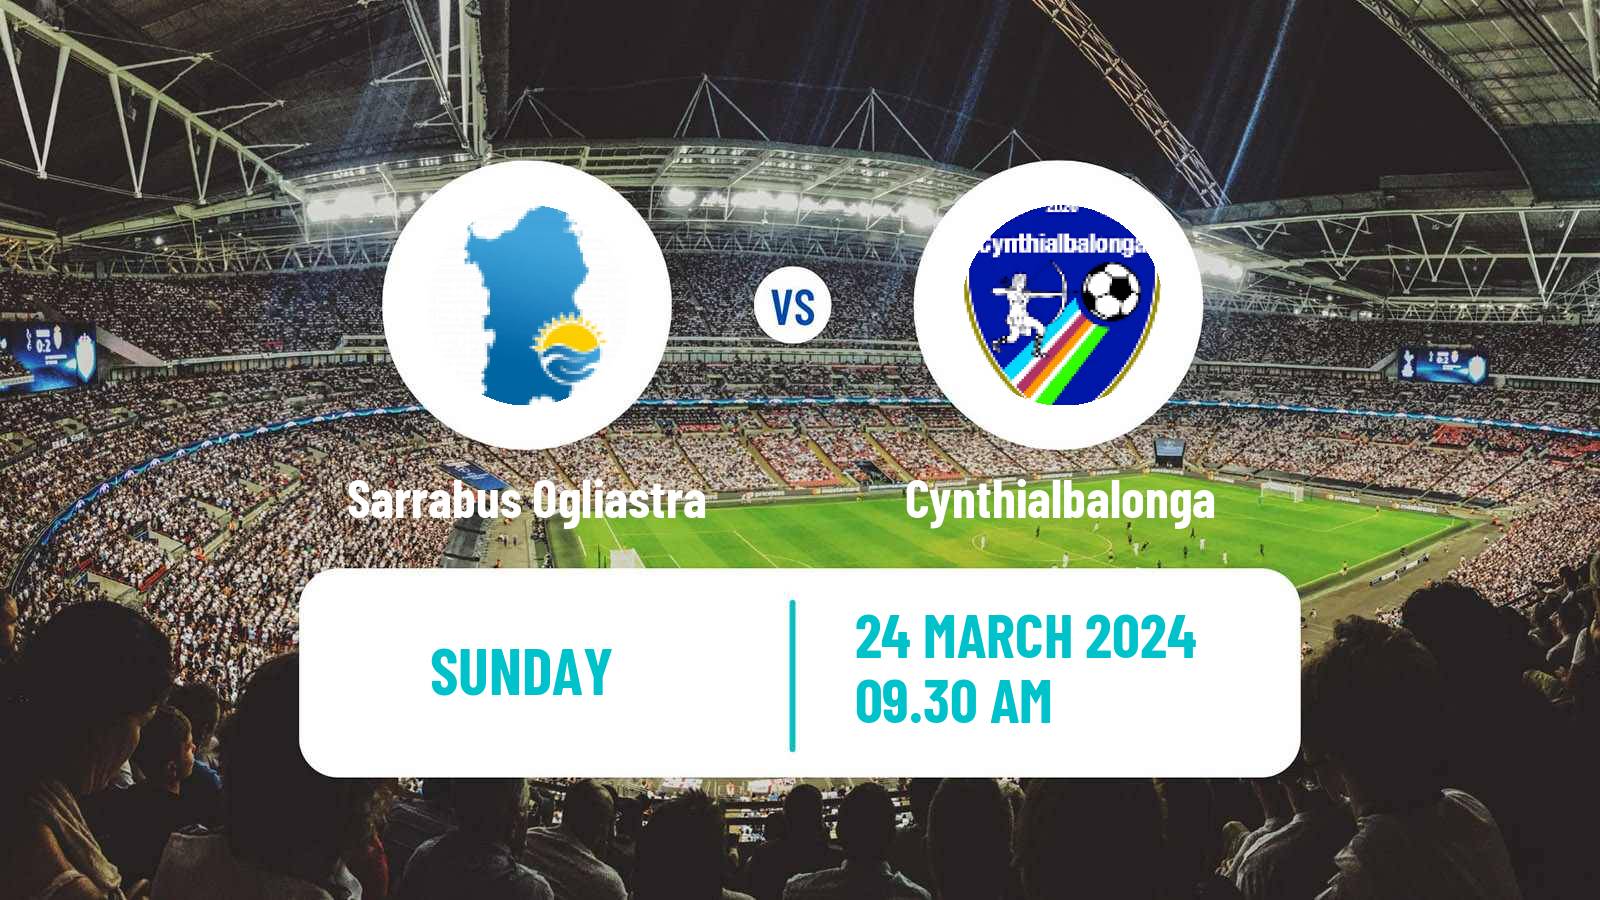 Soccer Italian Serie D - Group G Sarrabus Ogliastra - Cynthialbalonga